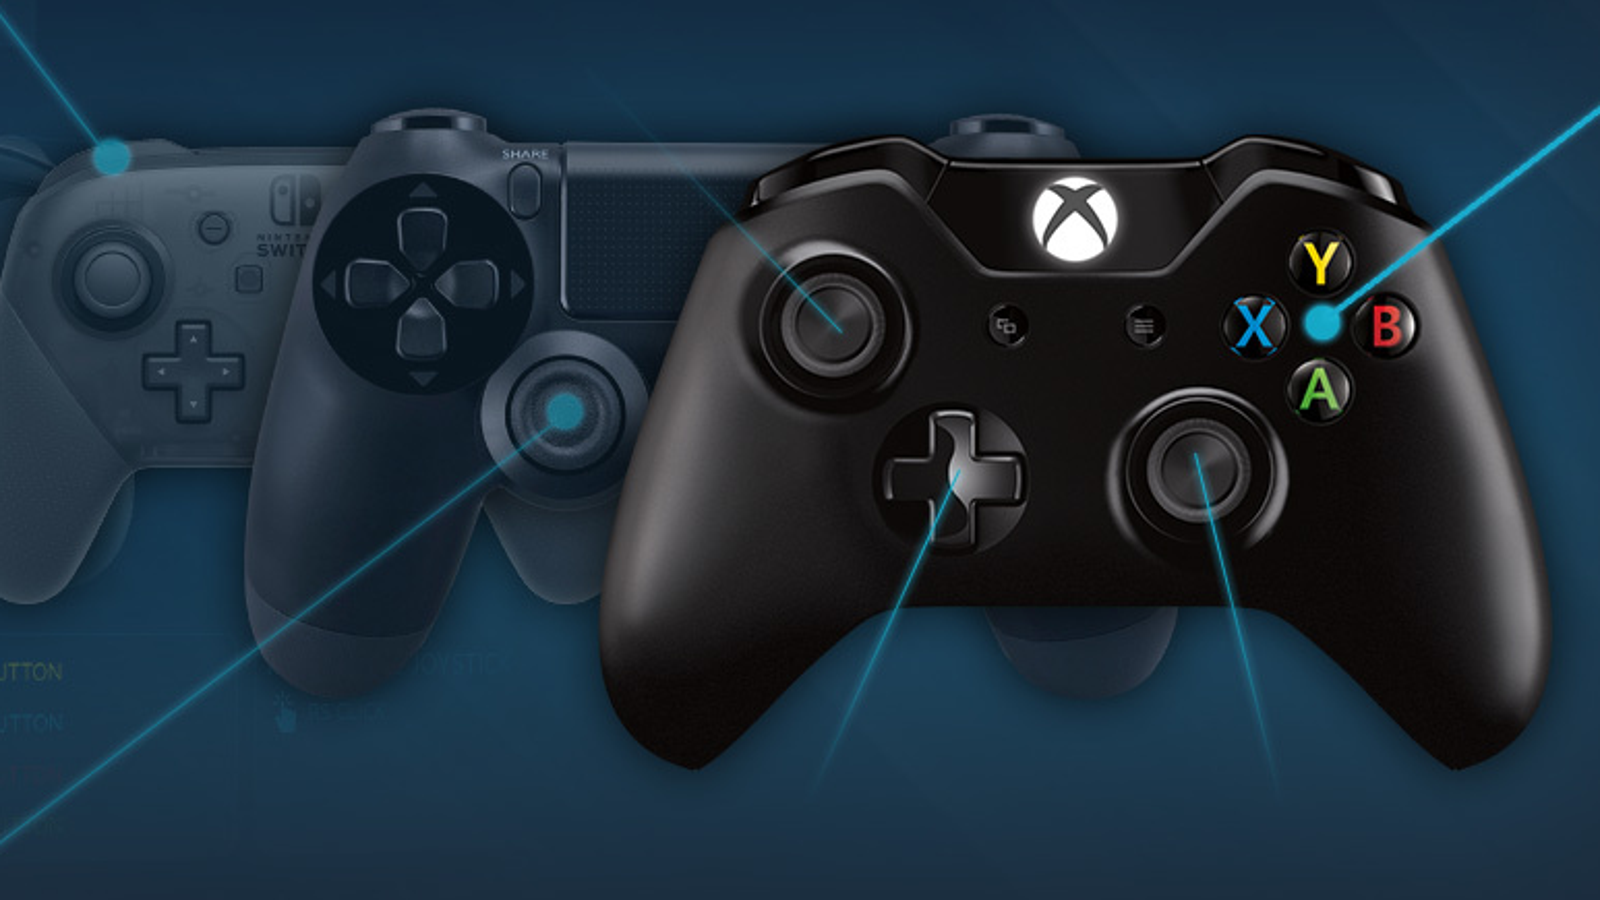 kapital telex Intrusion Xbox 360 remains most popular Steam controller, but Switch Pro is gaining  ground | Rock Paper Shotgun